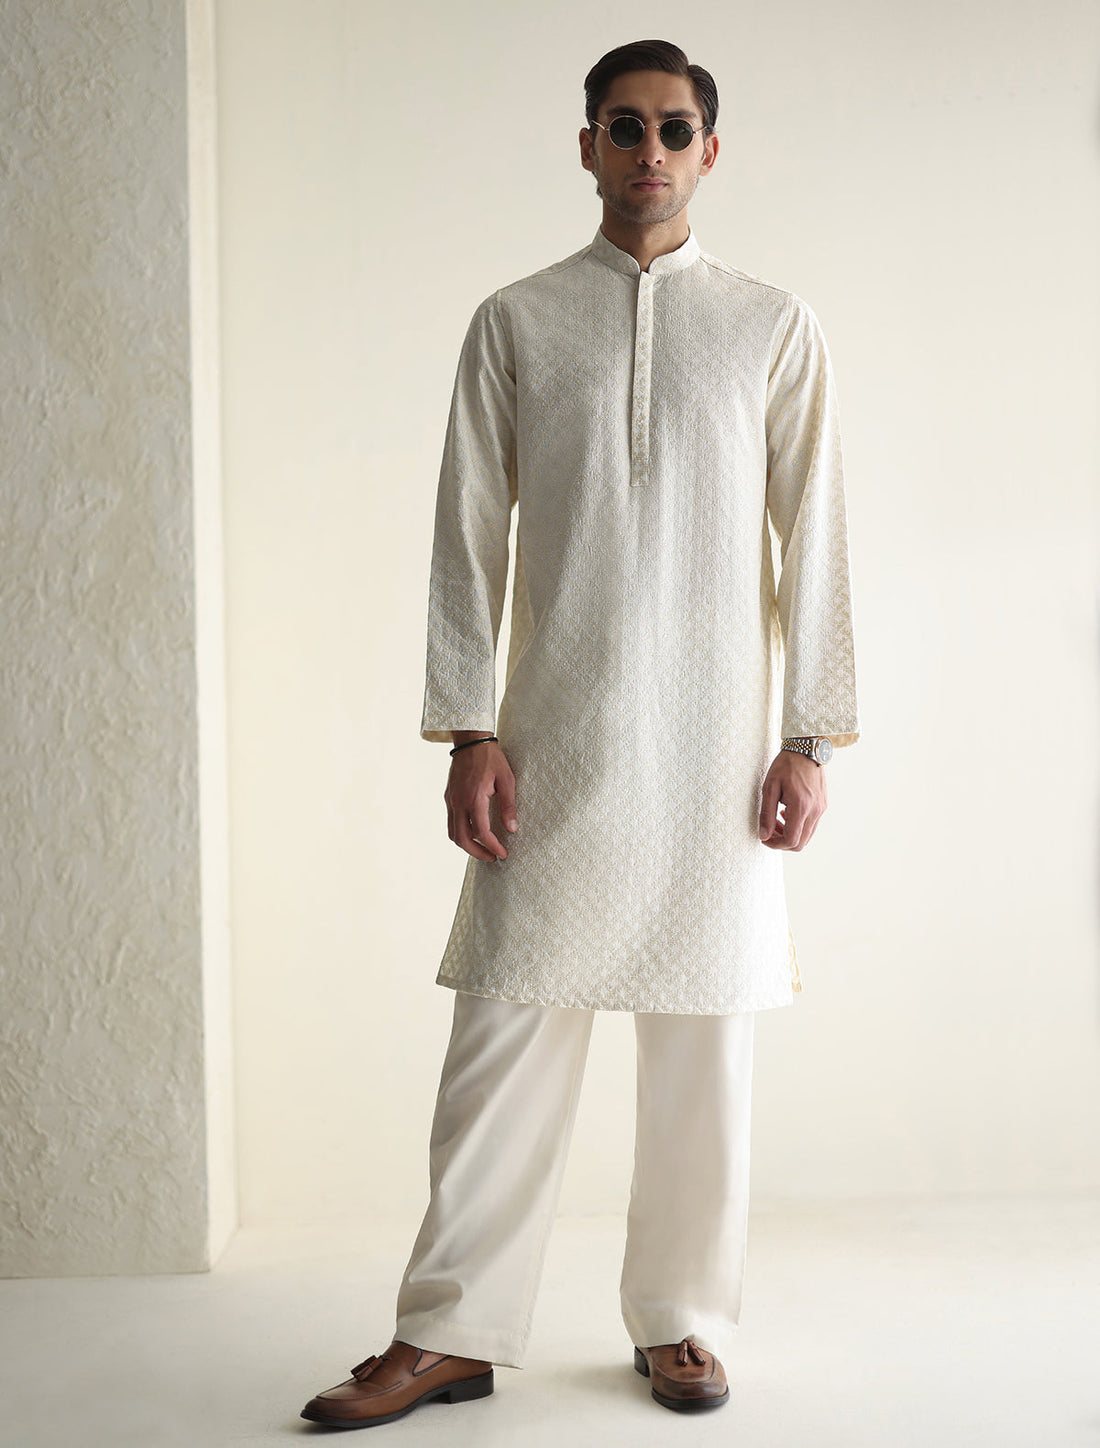 Pakistani Menswear | Ismail Farid - OFF-WHITE EMBROIDERED KURTA - Khanumjan  Pakistani Clothes and Designer Dresses in UK, USA 